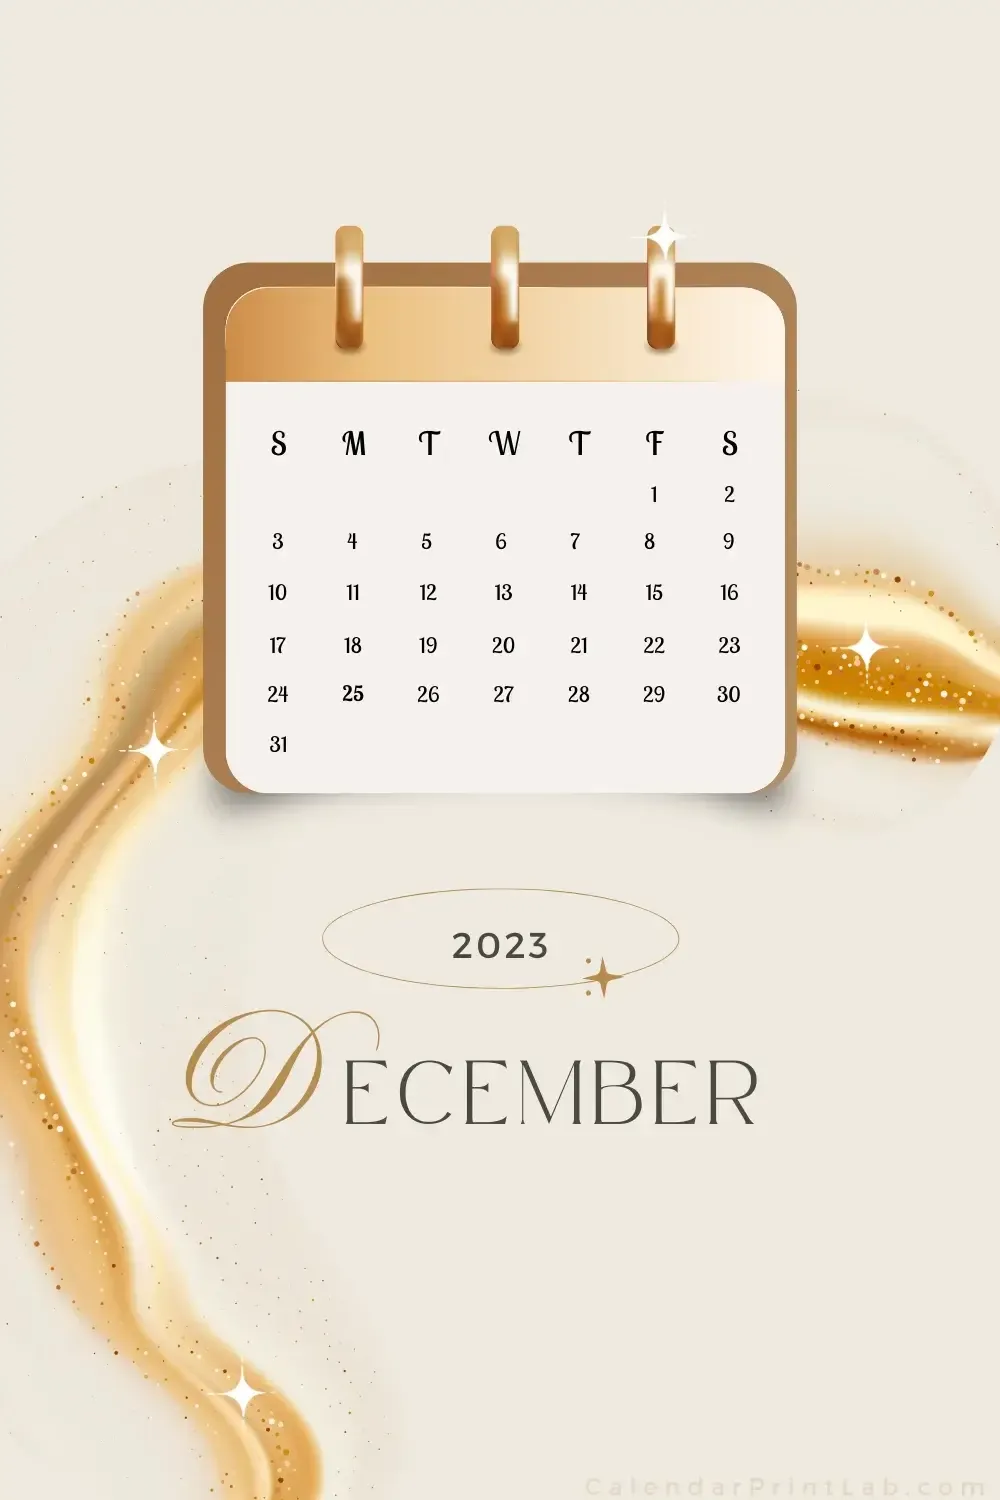 december 2023 iphone wallpaper